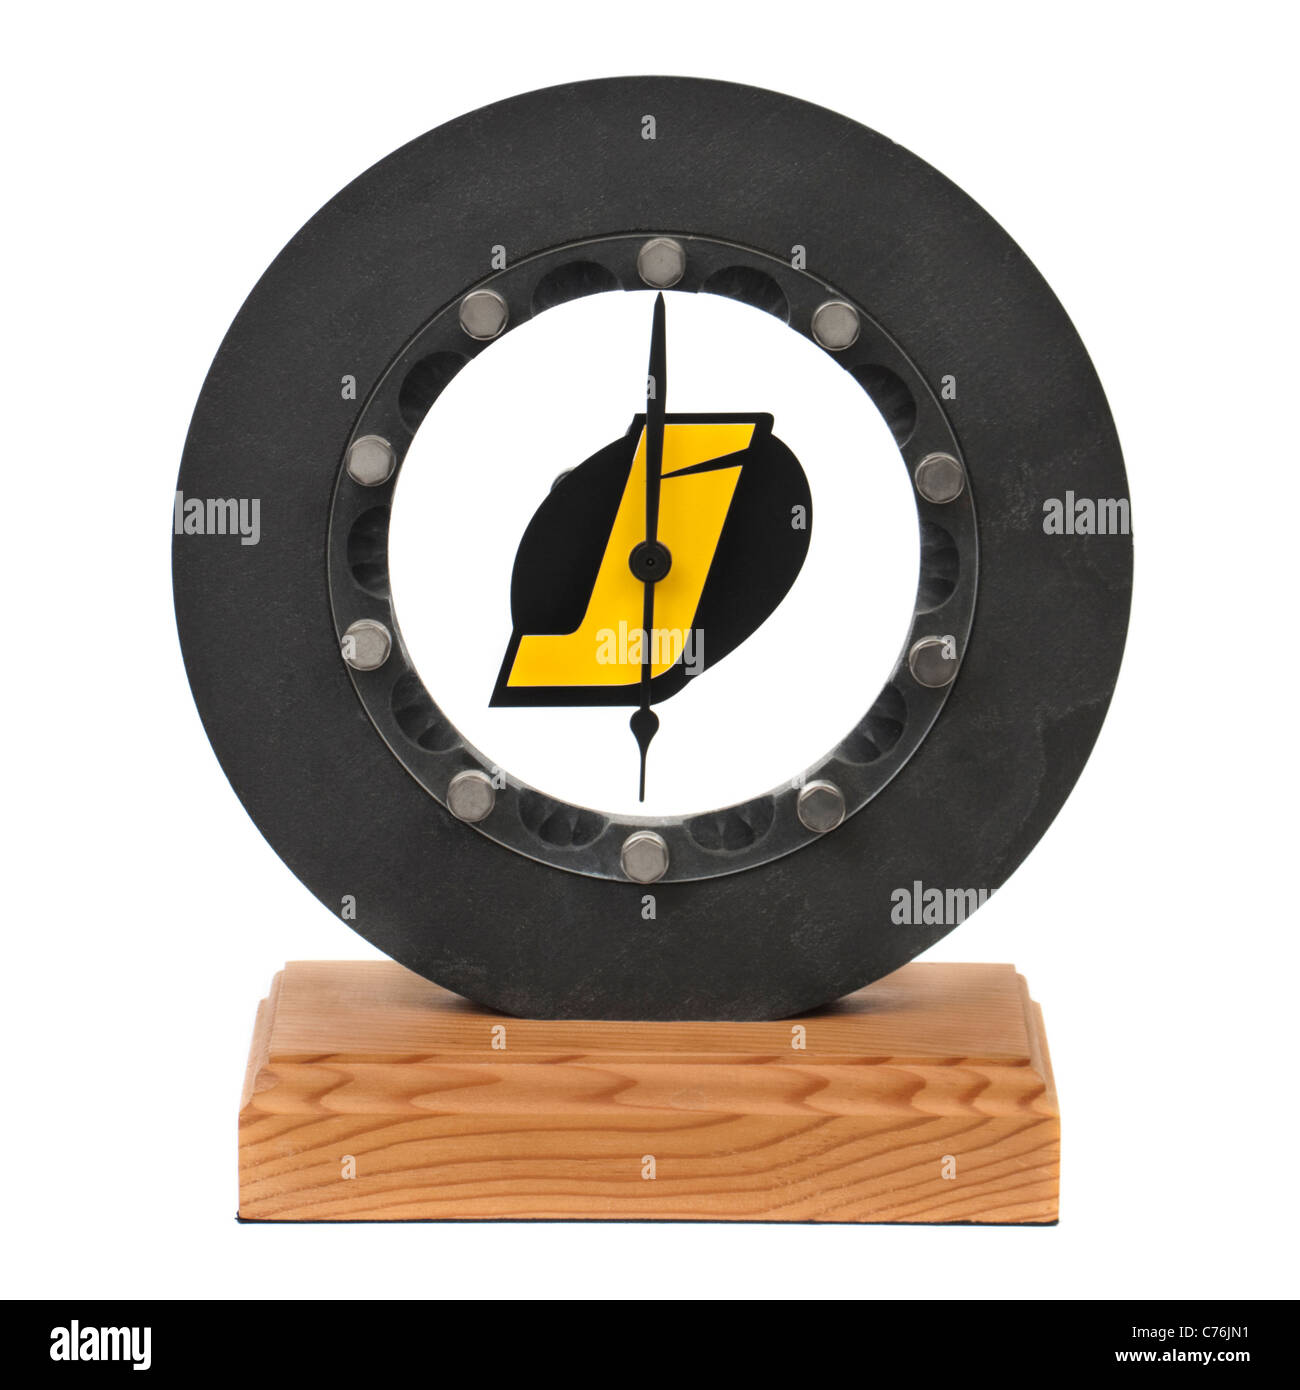 Jordan F1 Racing Team brake disc novelty clock (2002) Stock Photo